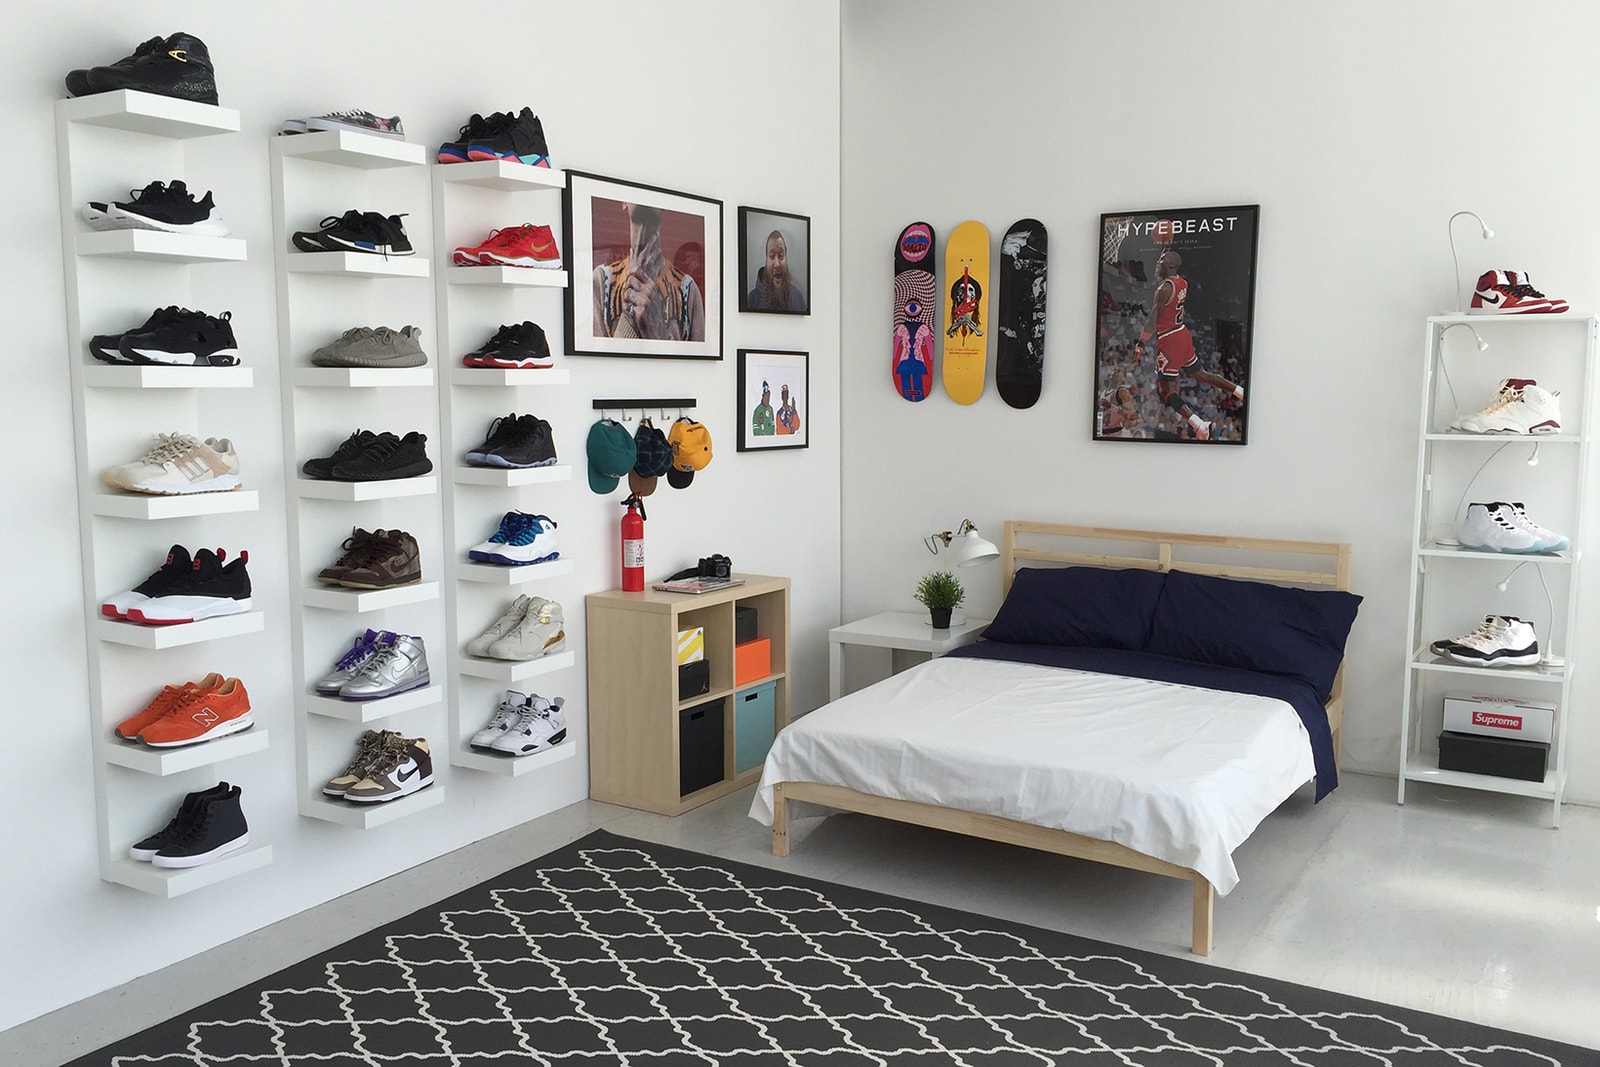 Fighter Sherlock Holmes Spild IKEA and HYPEBEAST Design the Ideal Sneakerhead Bedroom | Hypebeast